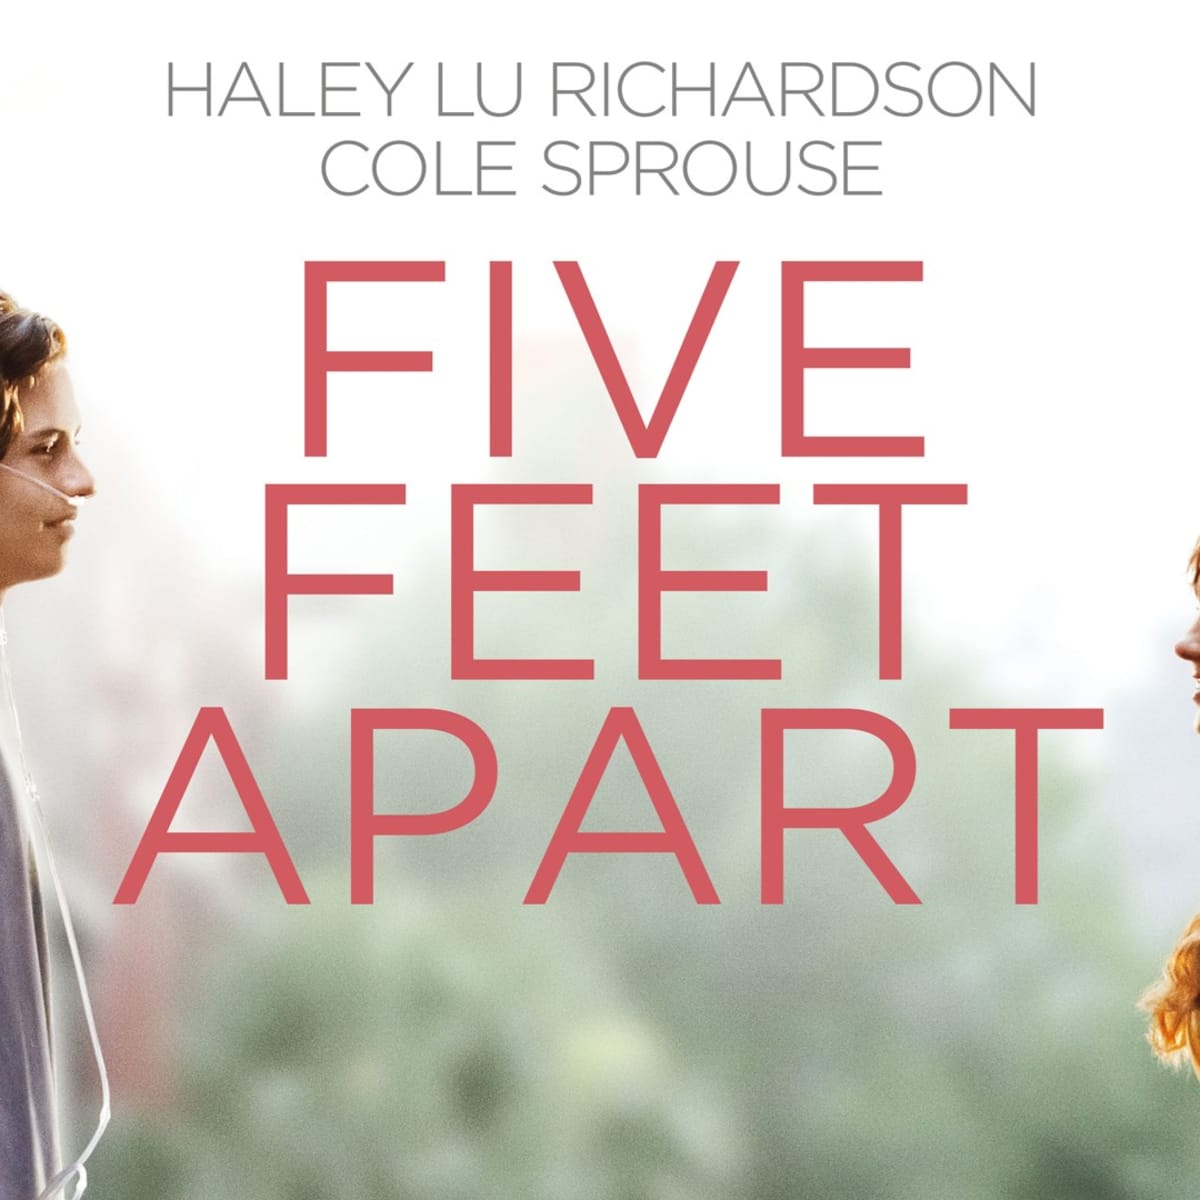 Five Feet Apart - Review